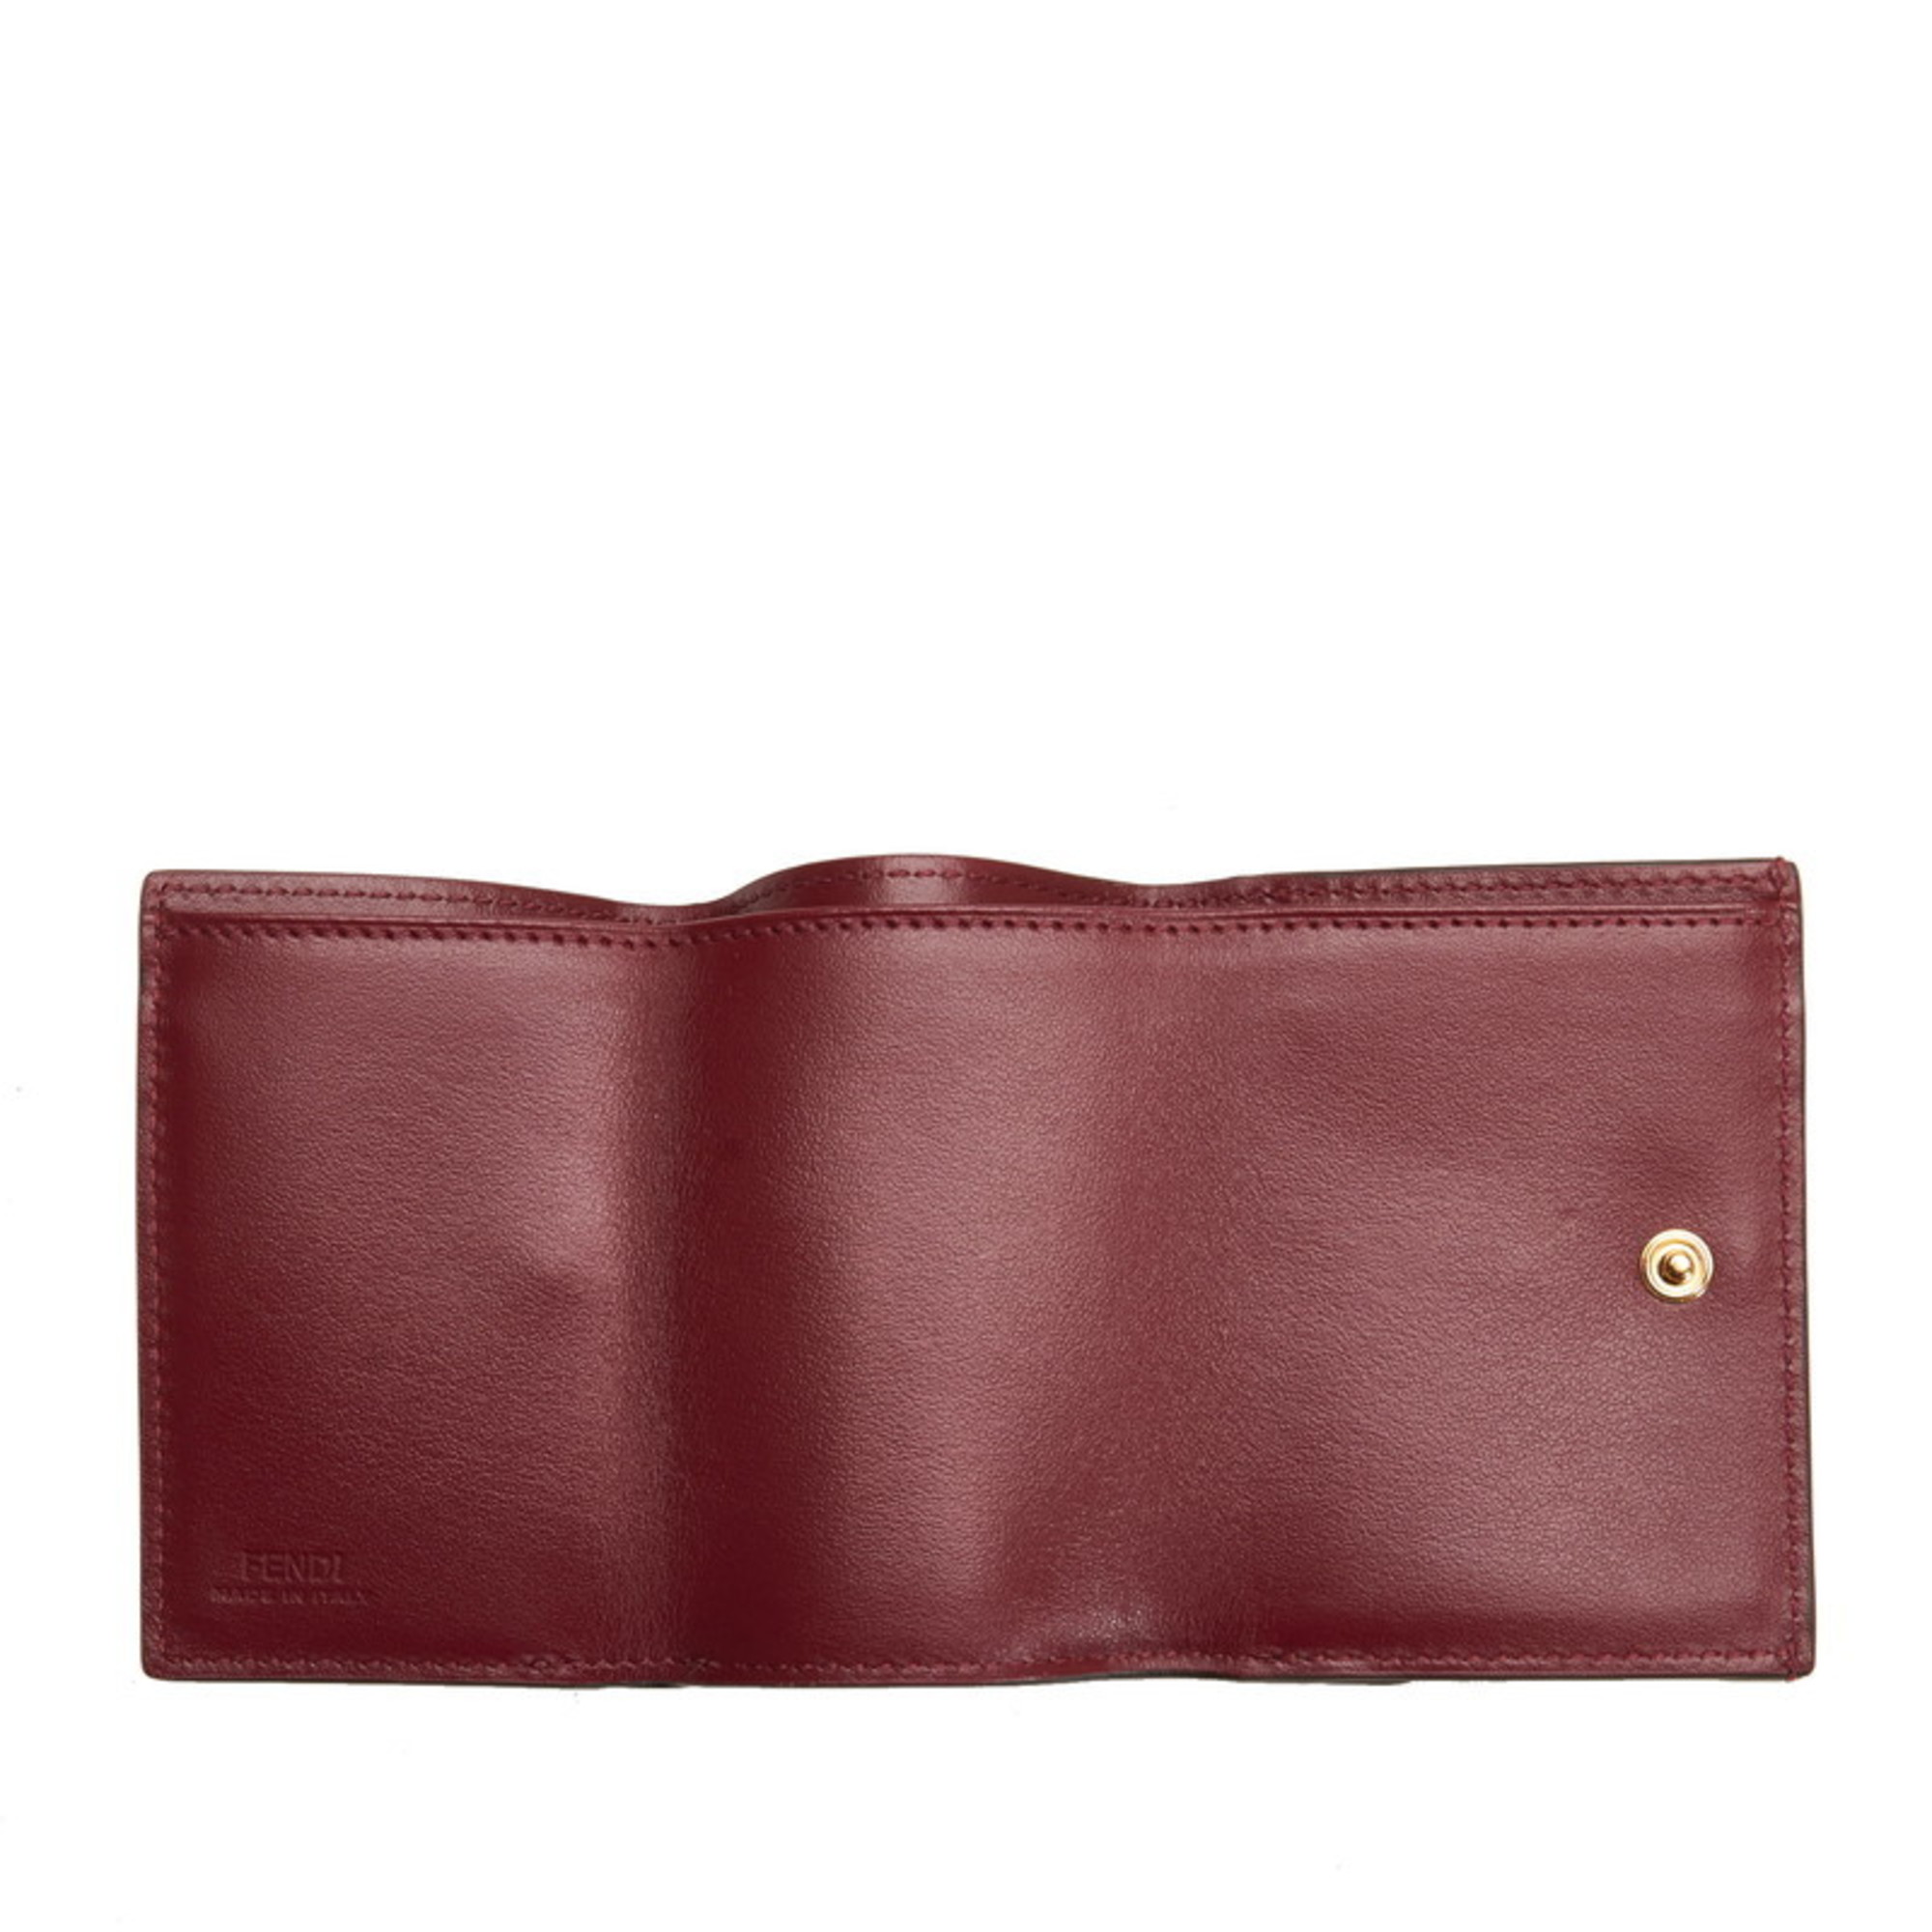 Fendi F is trifold wallet 8M0395 wine red leather ladies FENDI